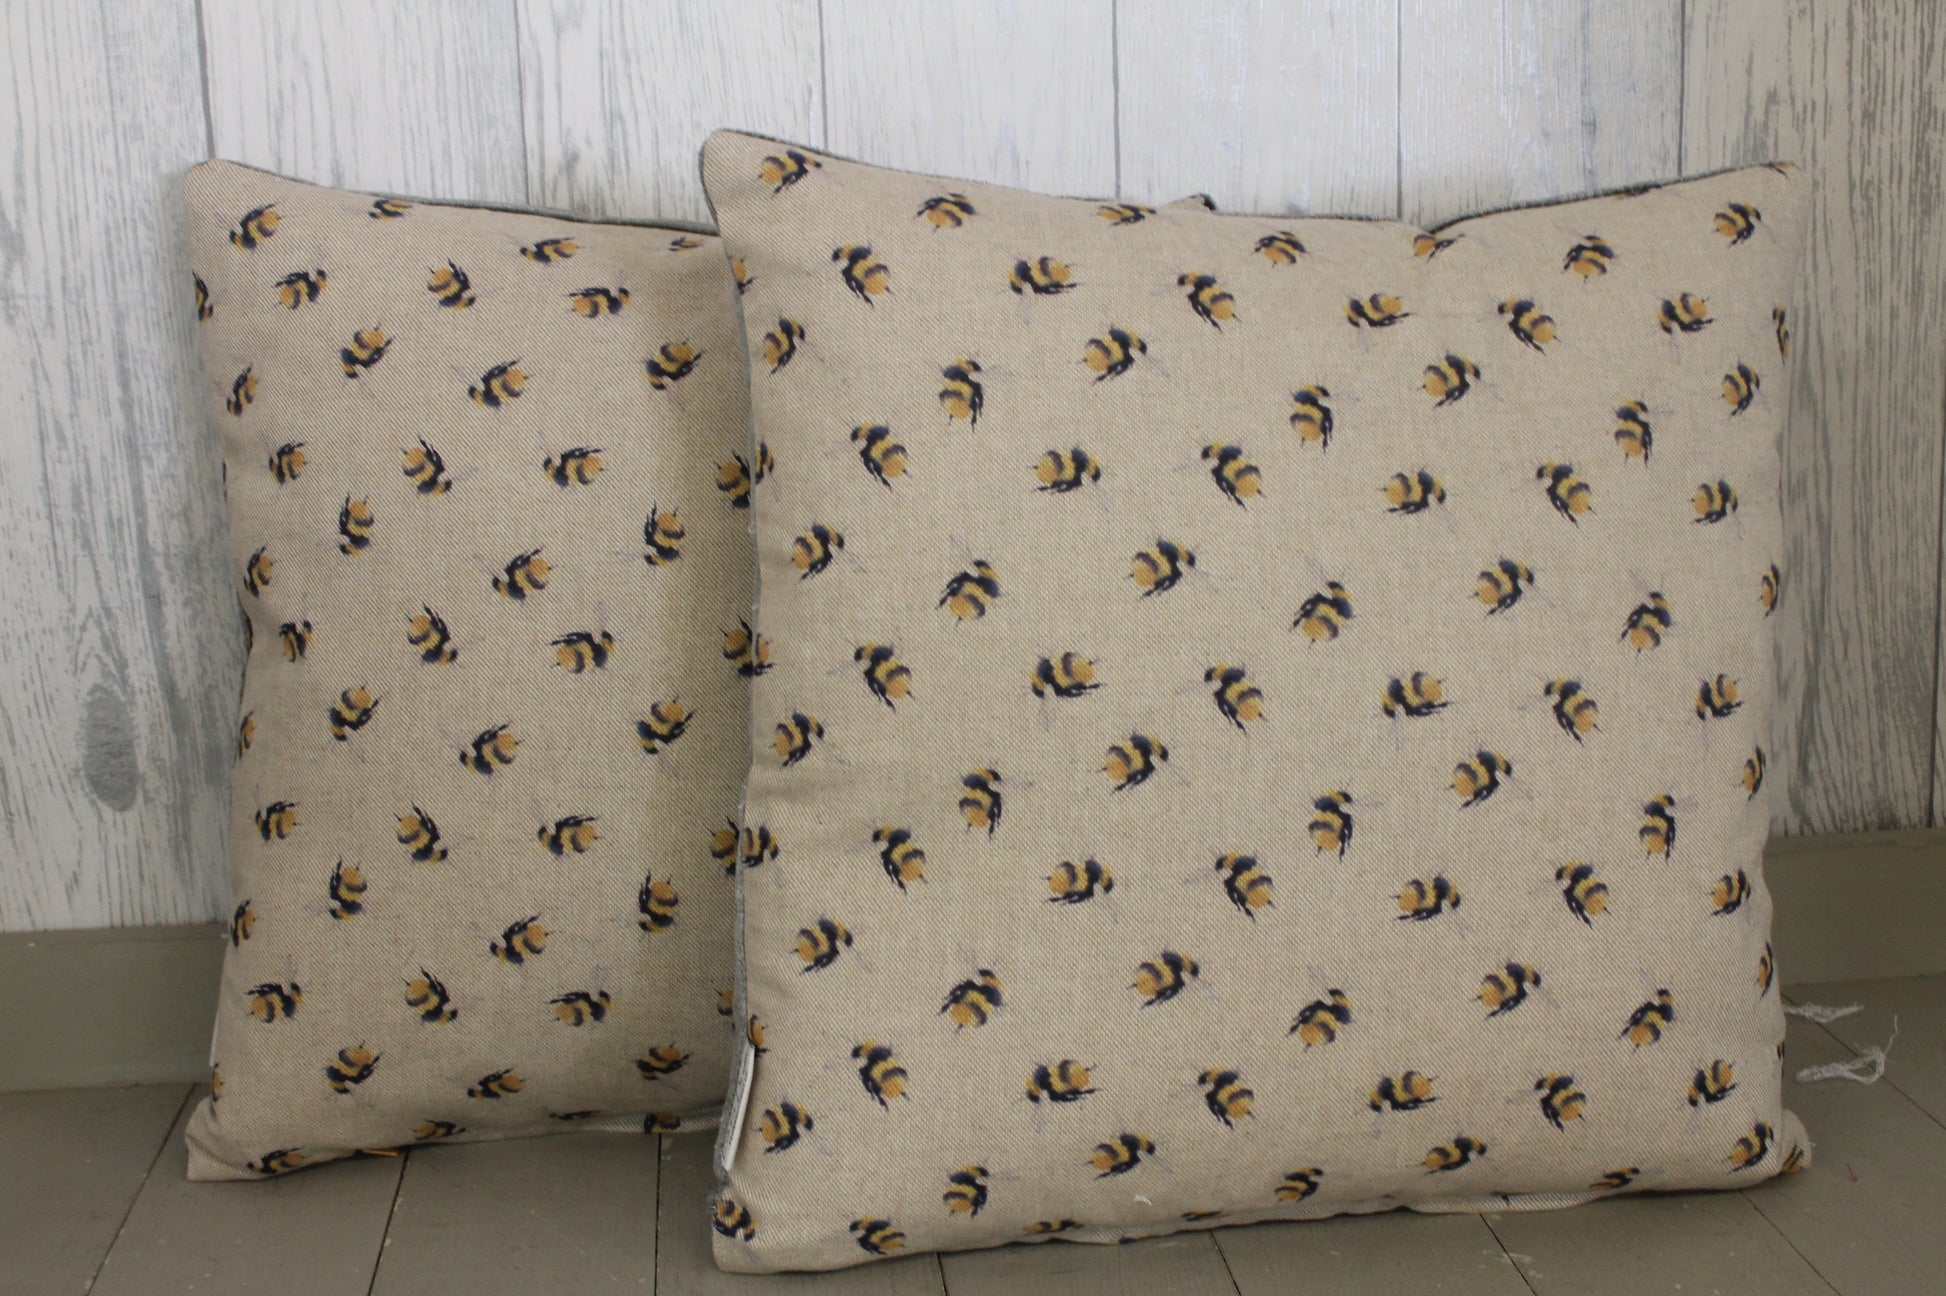 Bumble Bee Print Cushion - Lizzie Dixon Designs